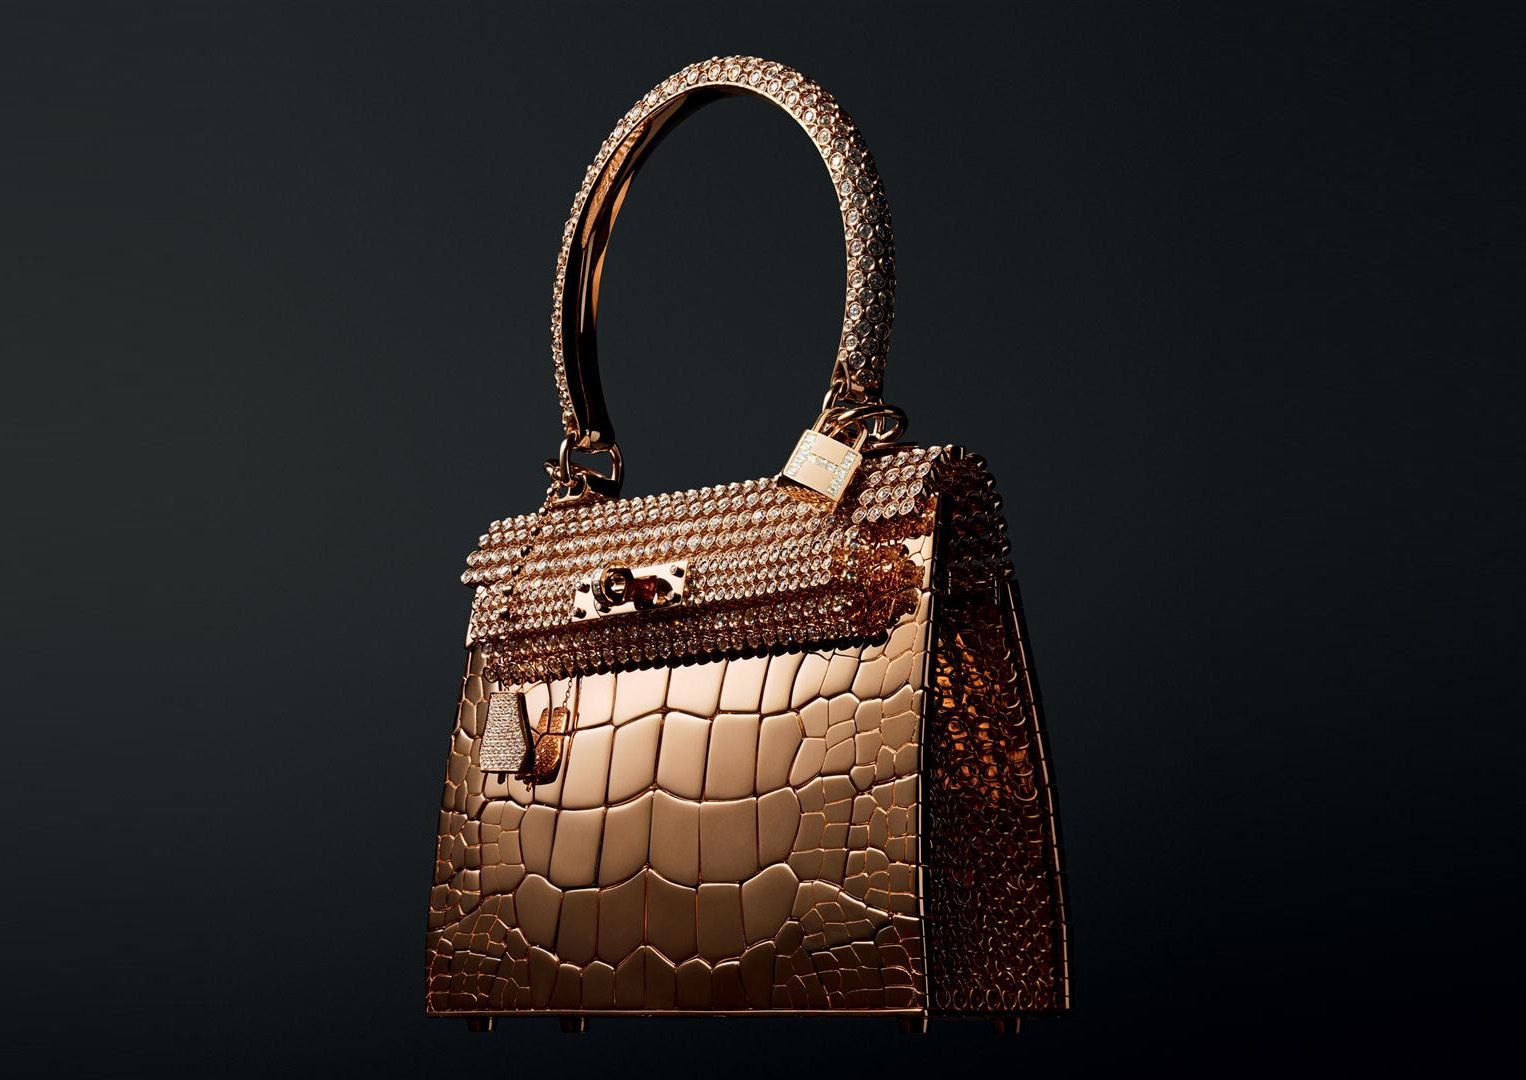 Top 10 Most Popular Handbag Designers Walden Wong